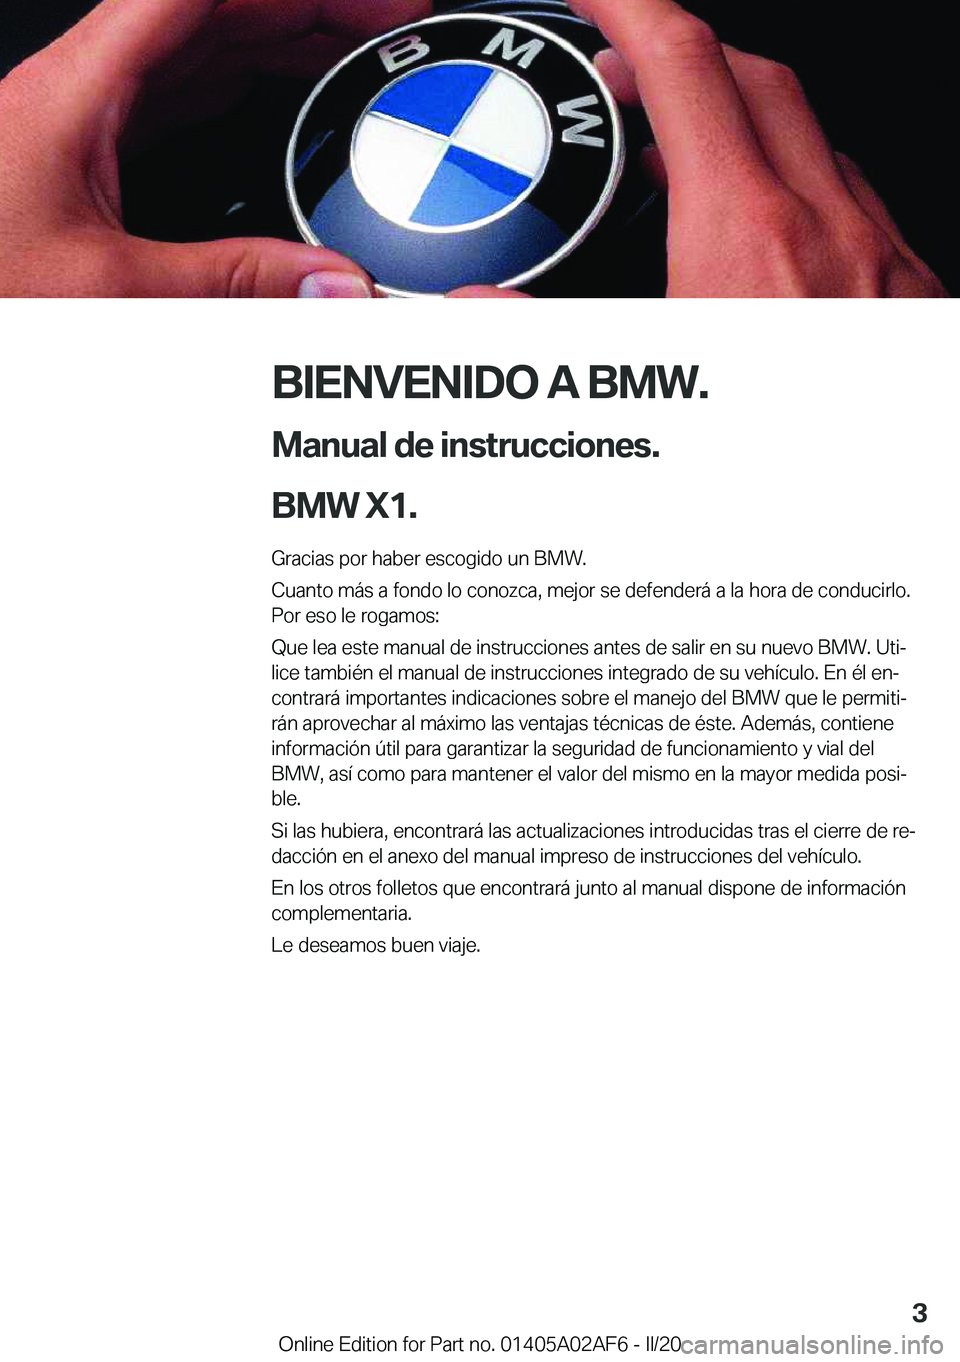 BMW X1 2020  Manuales de Empleo (in Spanish) �B�I�E�N�V�E�N�I�D�O��A��B�M�W�.
�M�a�n�u�a�l��d�e��i�n�s�t�r�u�c�c�i�o�n�e�s�.
�B�M�W��X�1�. �G�r�a�c�i�a�s��p�o�r��h�a�b�e�r��e�s�c�o�g�i�d�o��u�n��B�M�W�.�C�u�a�n�t�o��m�